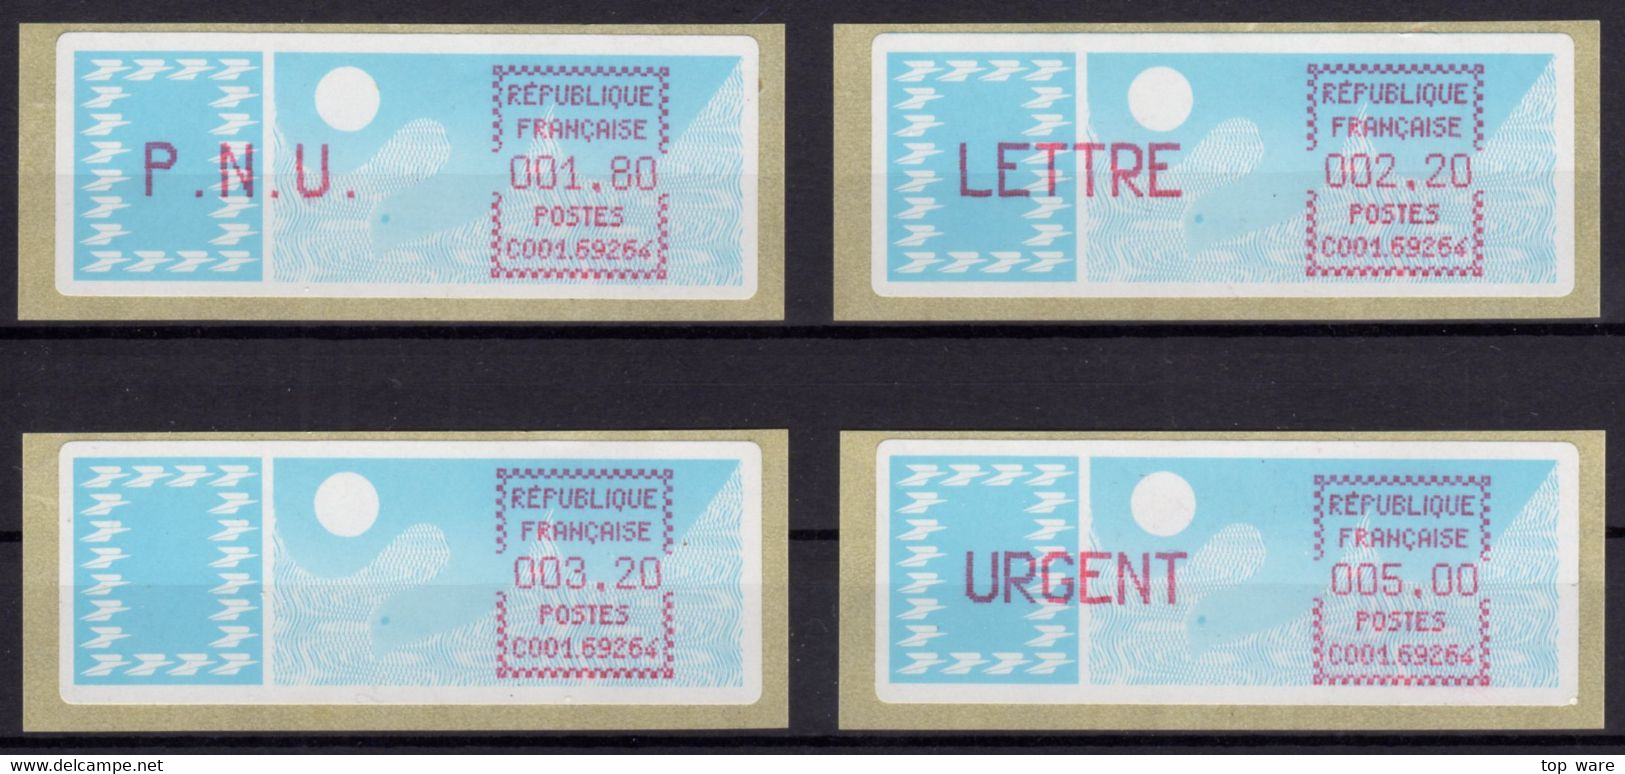 France ATM Stamps C001.69264 Michel 6.5 Zd Series ZS2 Neuf / MNH / Crouzet LSA Distributeurs Automatenmarken Frama Lisa - 1985 Carta « Carrier »